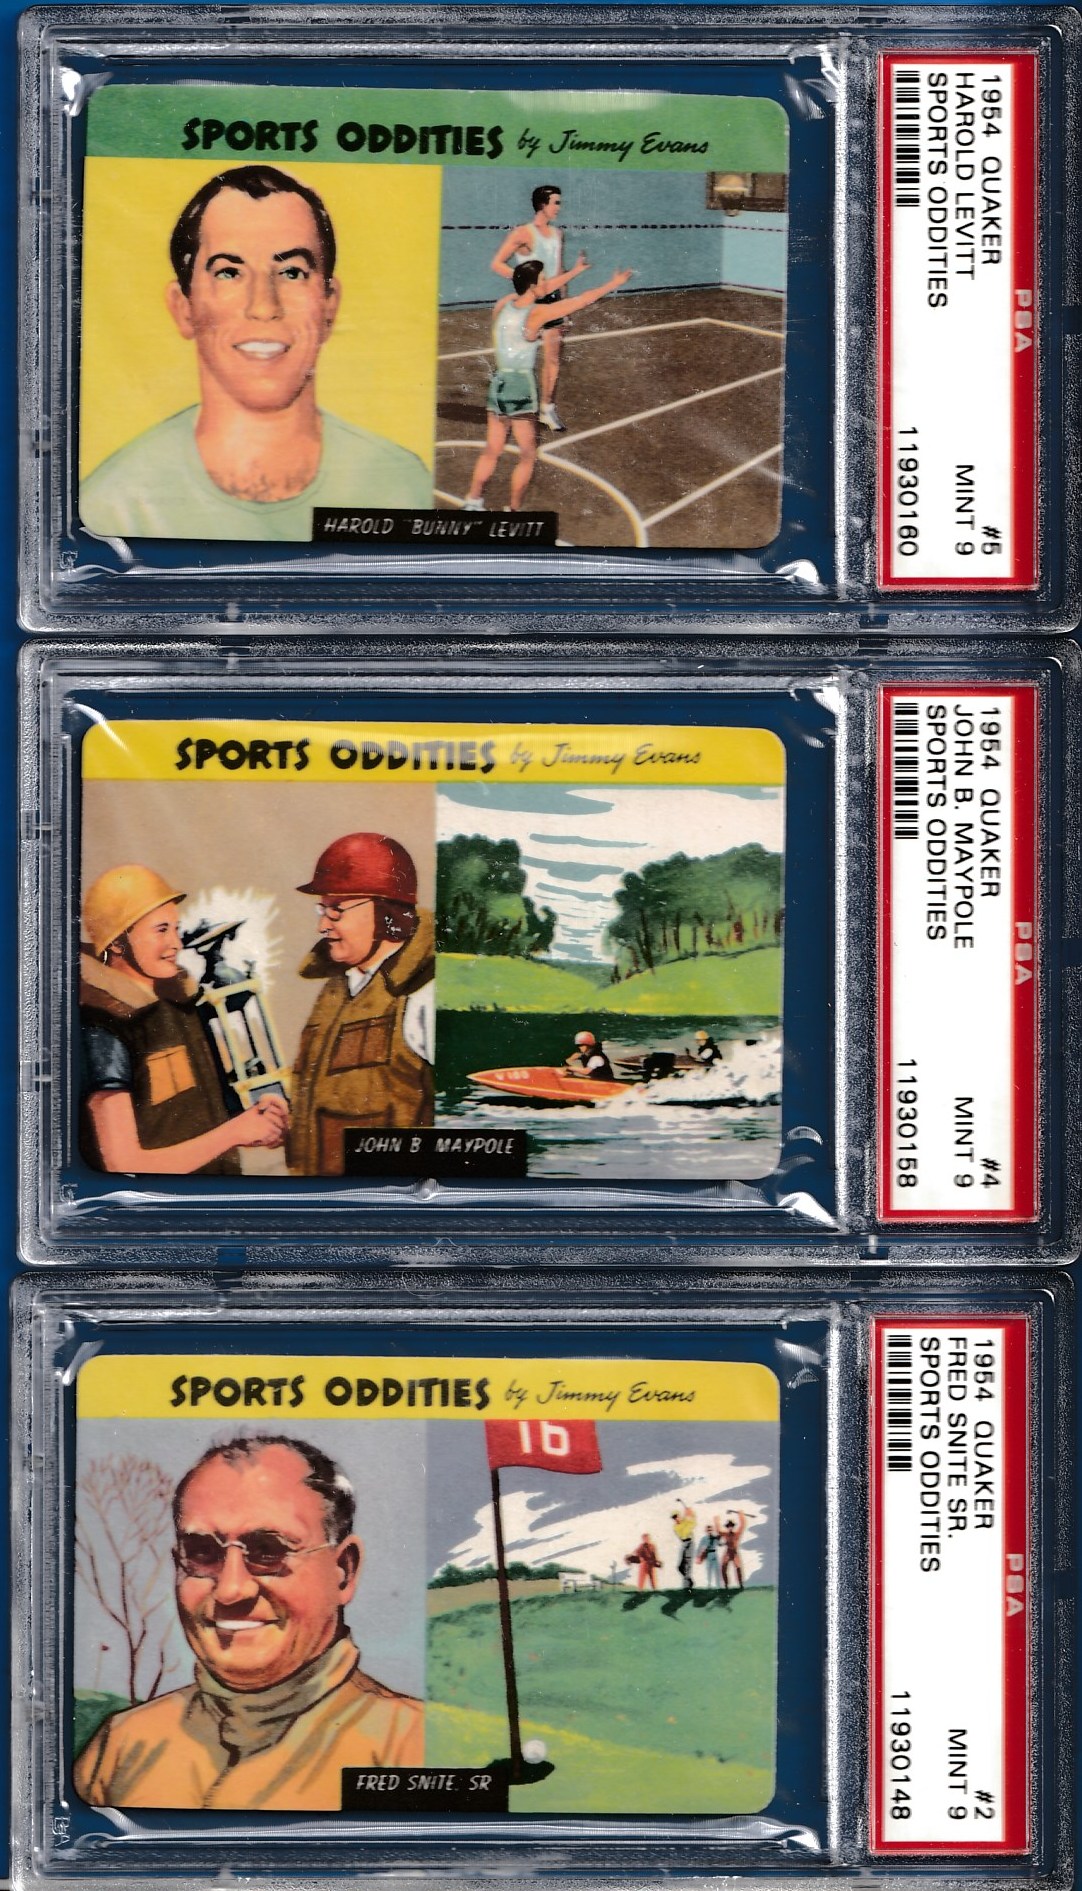 1954 Quaker Oats Sports Oddities # 5 Harold 'Bunny' Levitt (Basketball) Baseball cards value